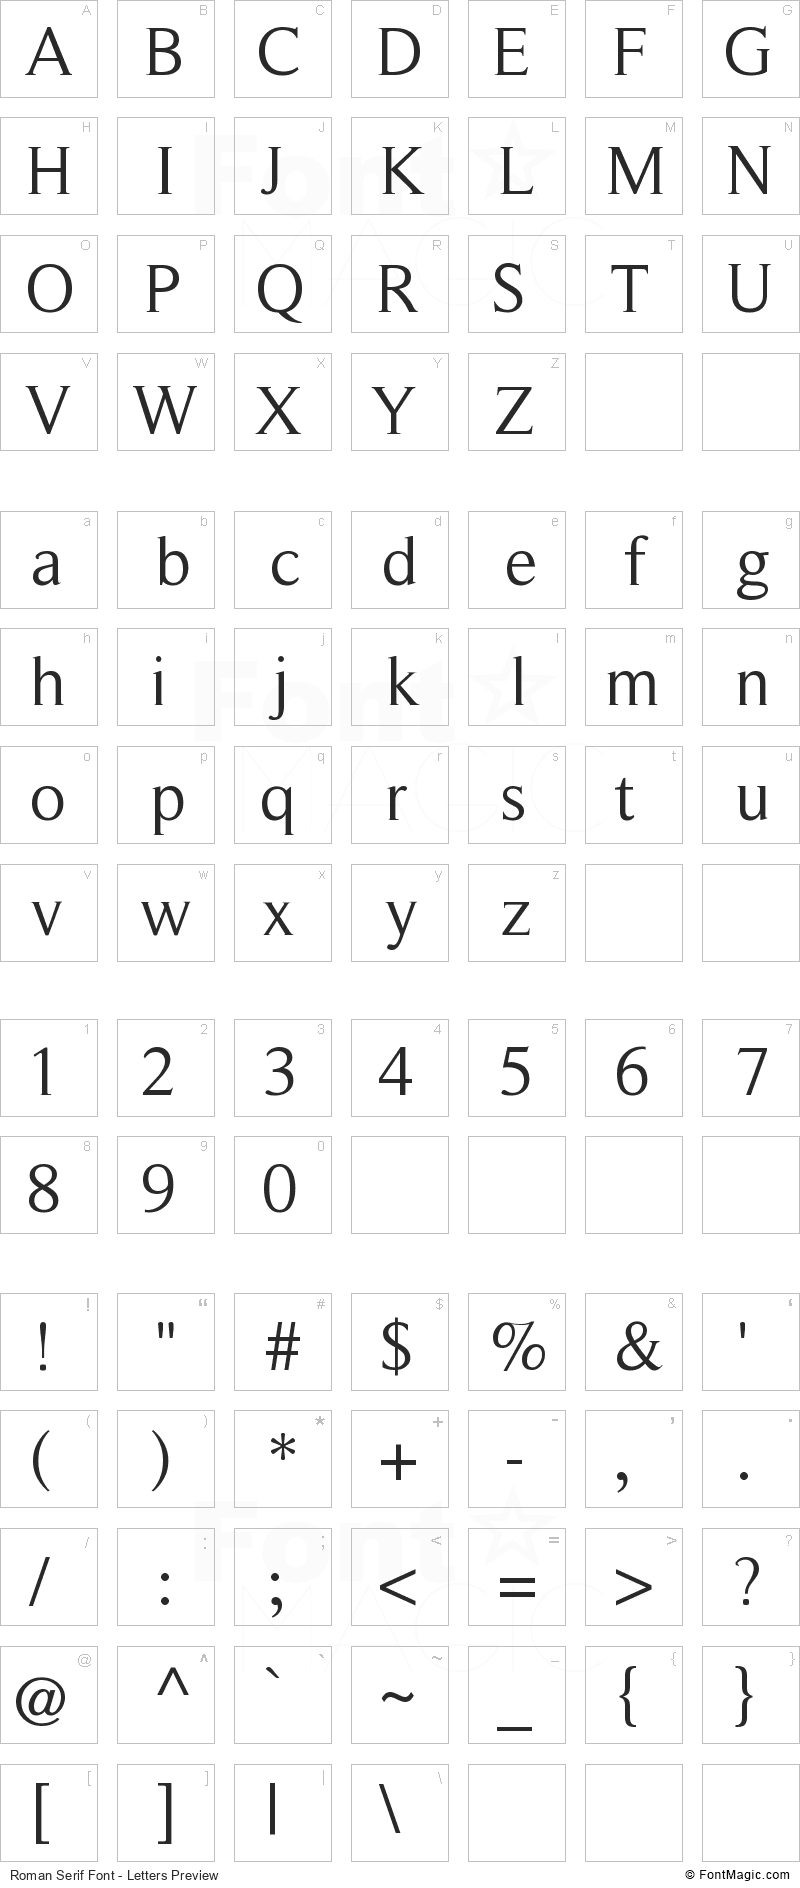 Roman Serif Font - All Latters Preview Chart